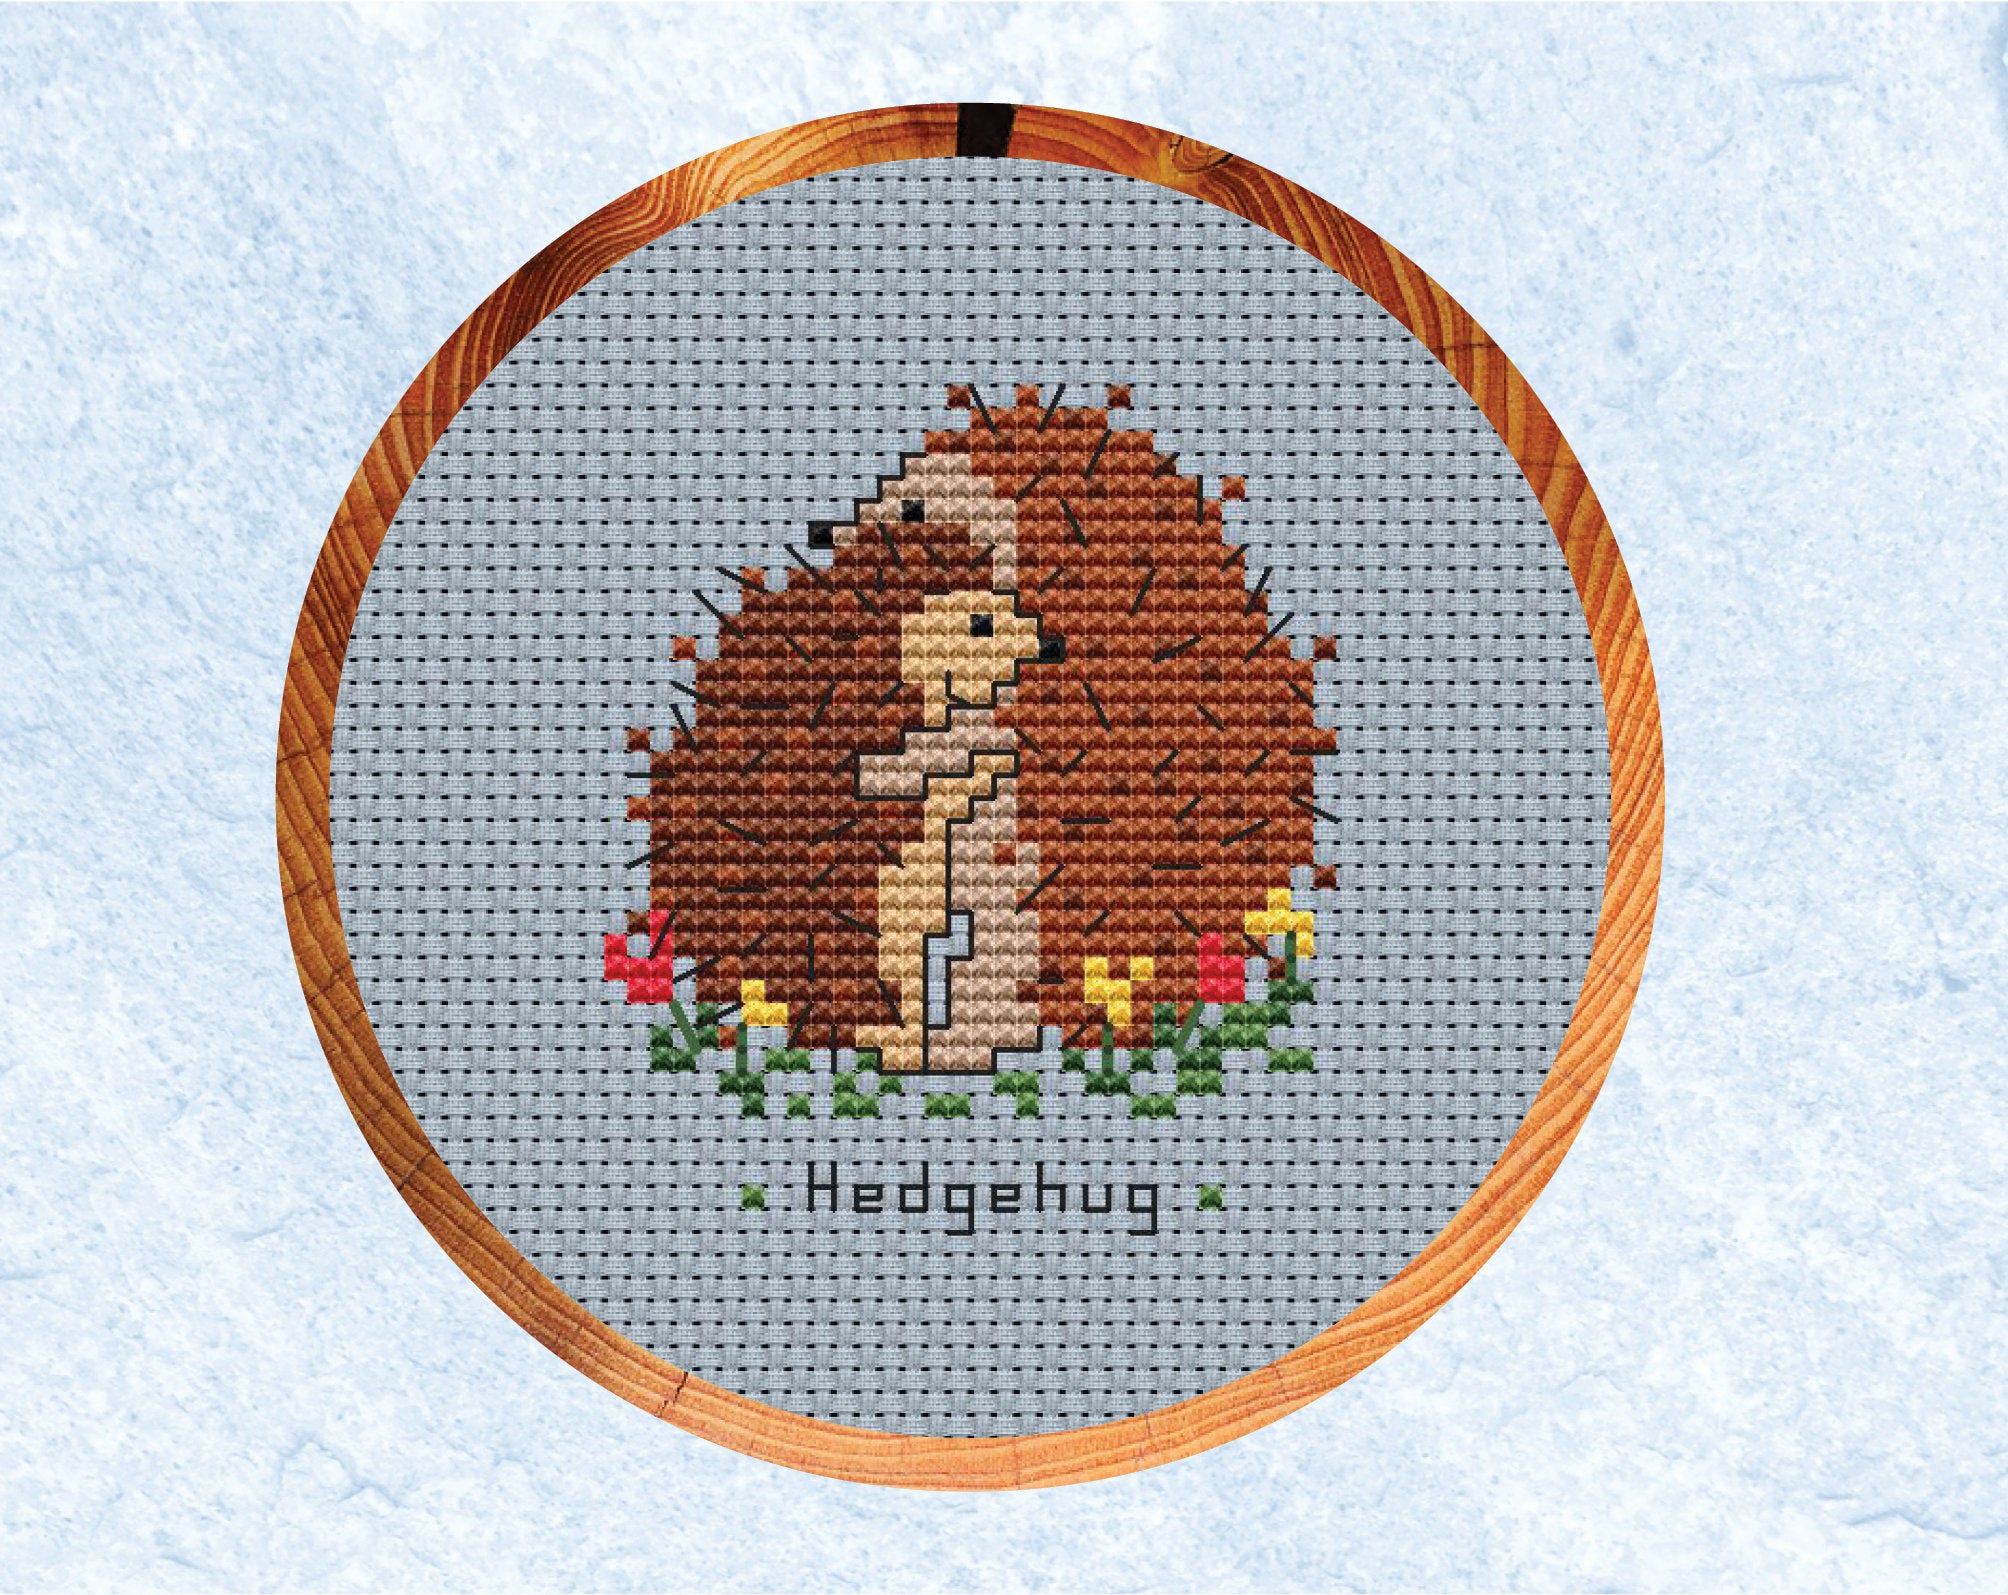 'Hedgehug' Hedgehogs cross stitch pattern - in hoop